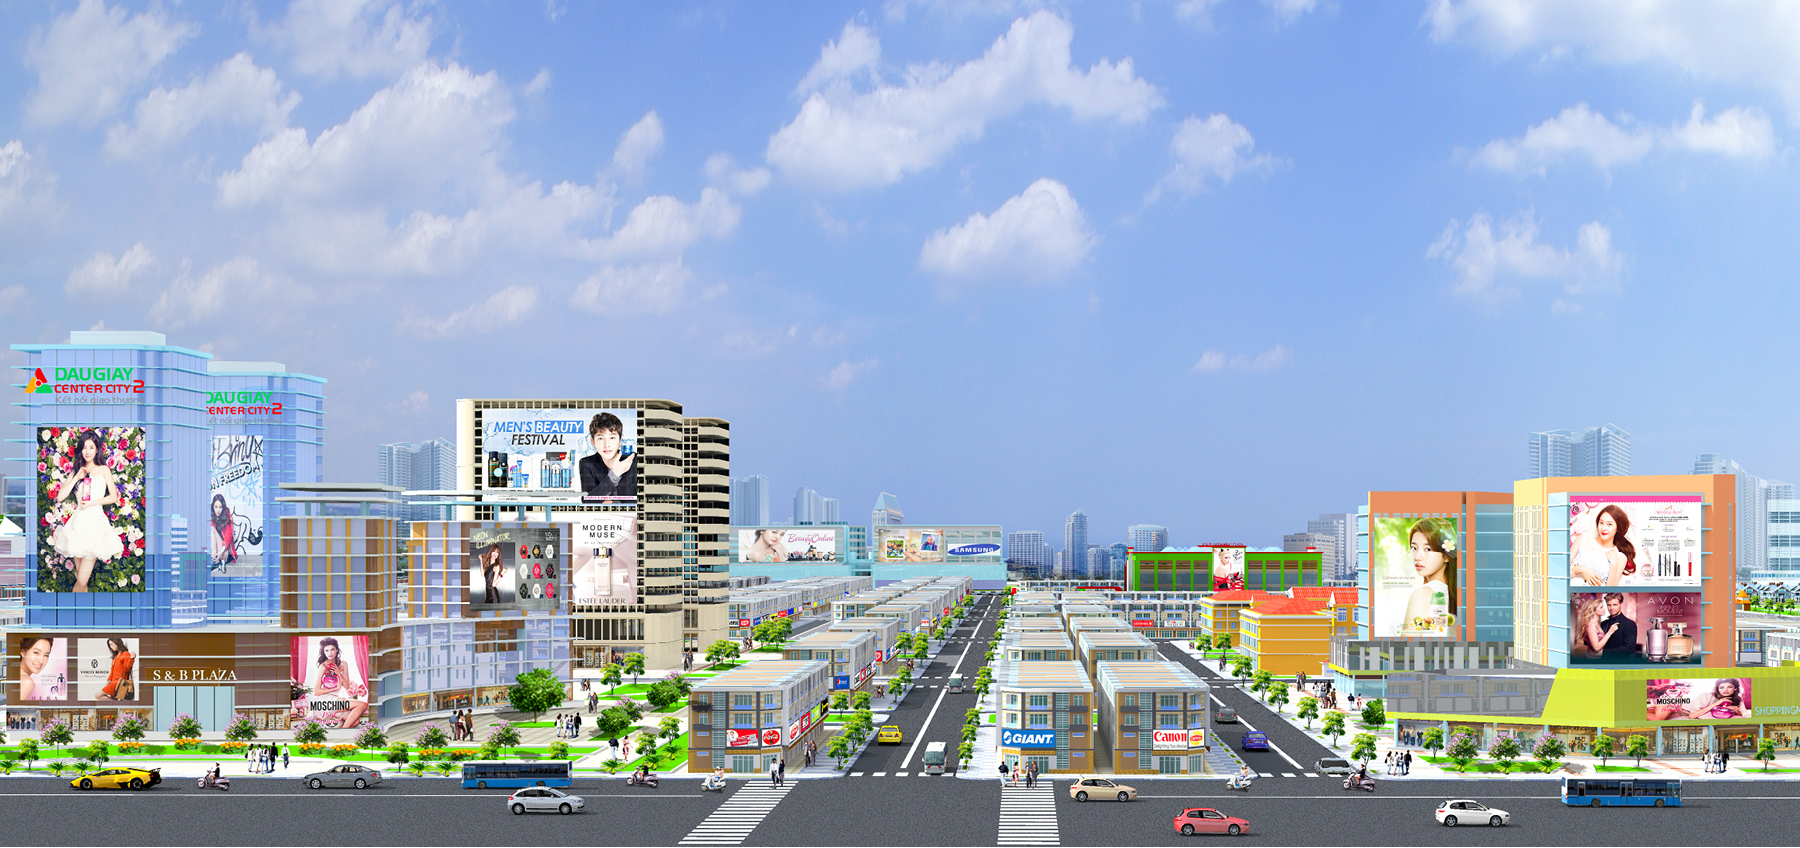 Dau Giay Center City Urban Area